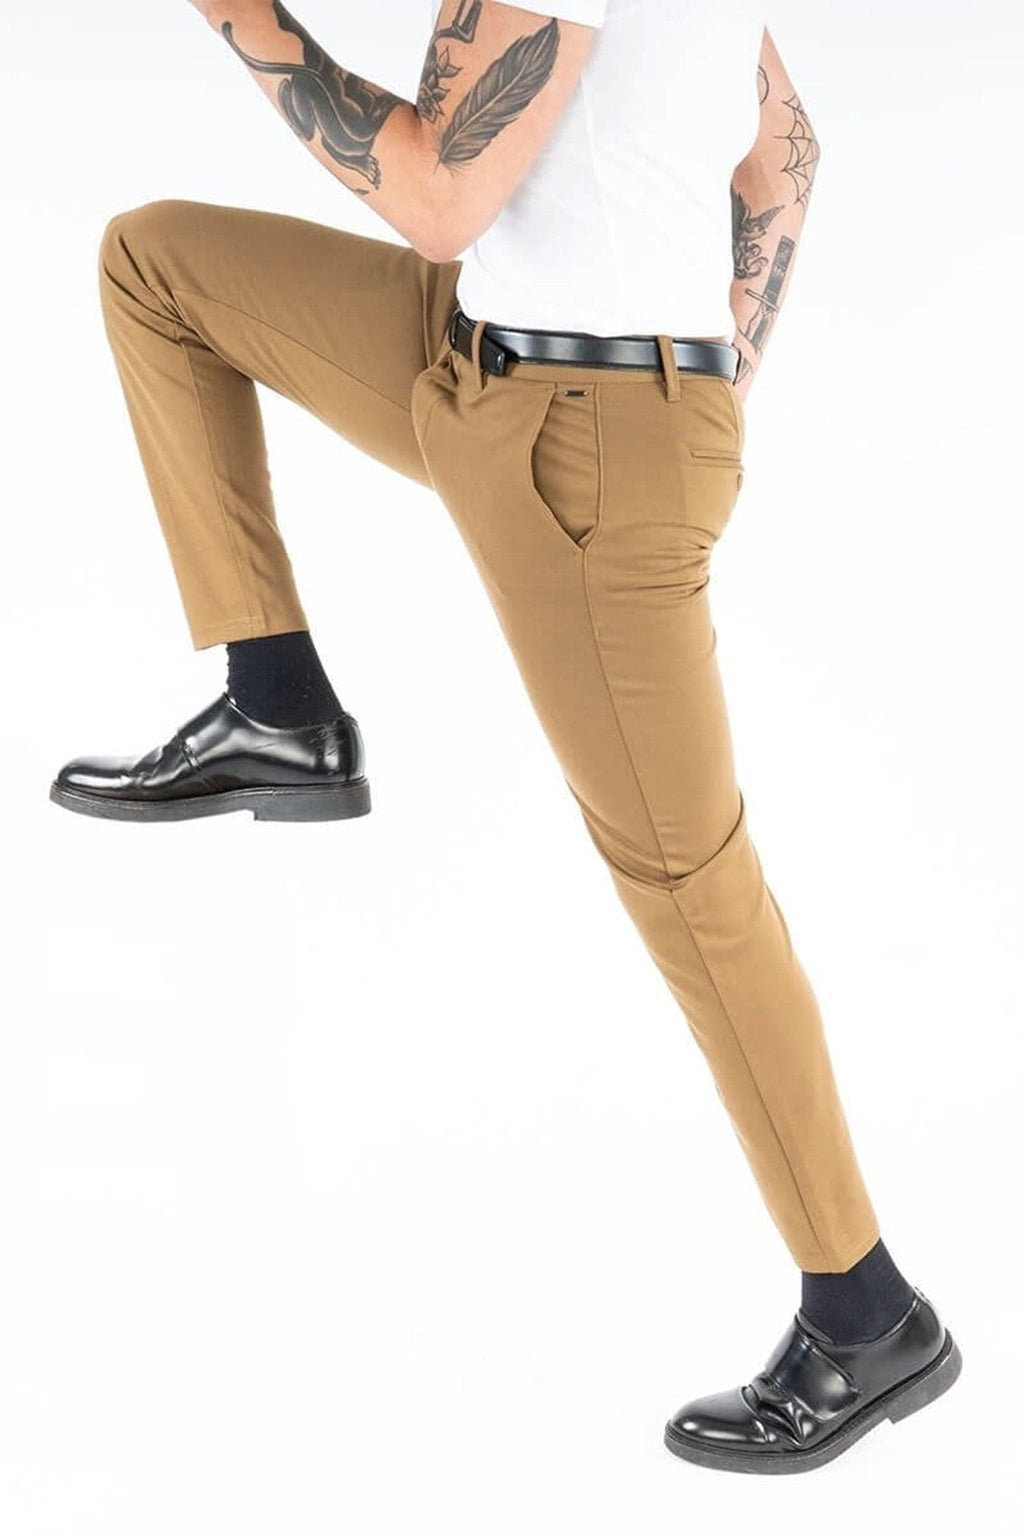 Marcos Pantalones - Kangaroo (pantalones elásticos)